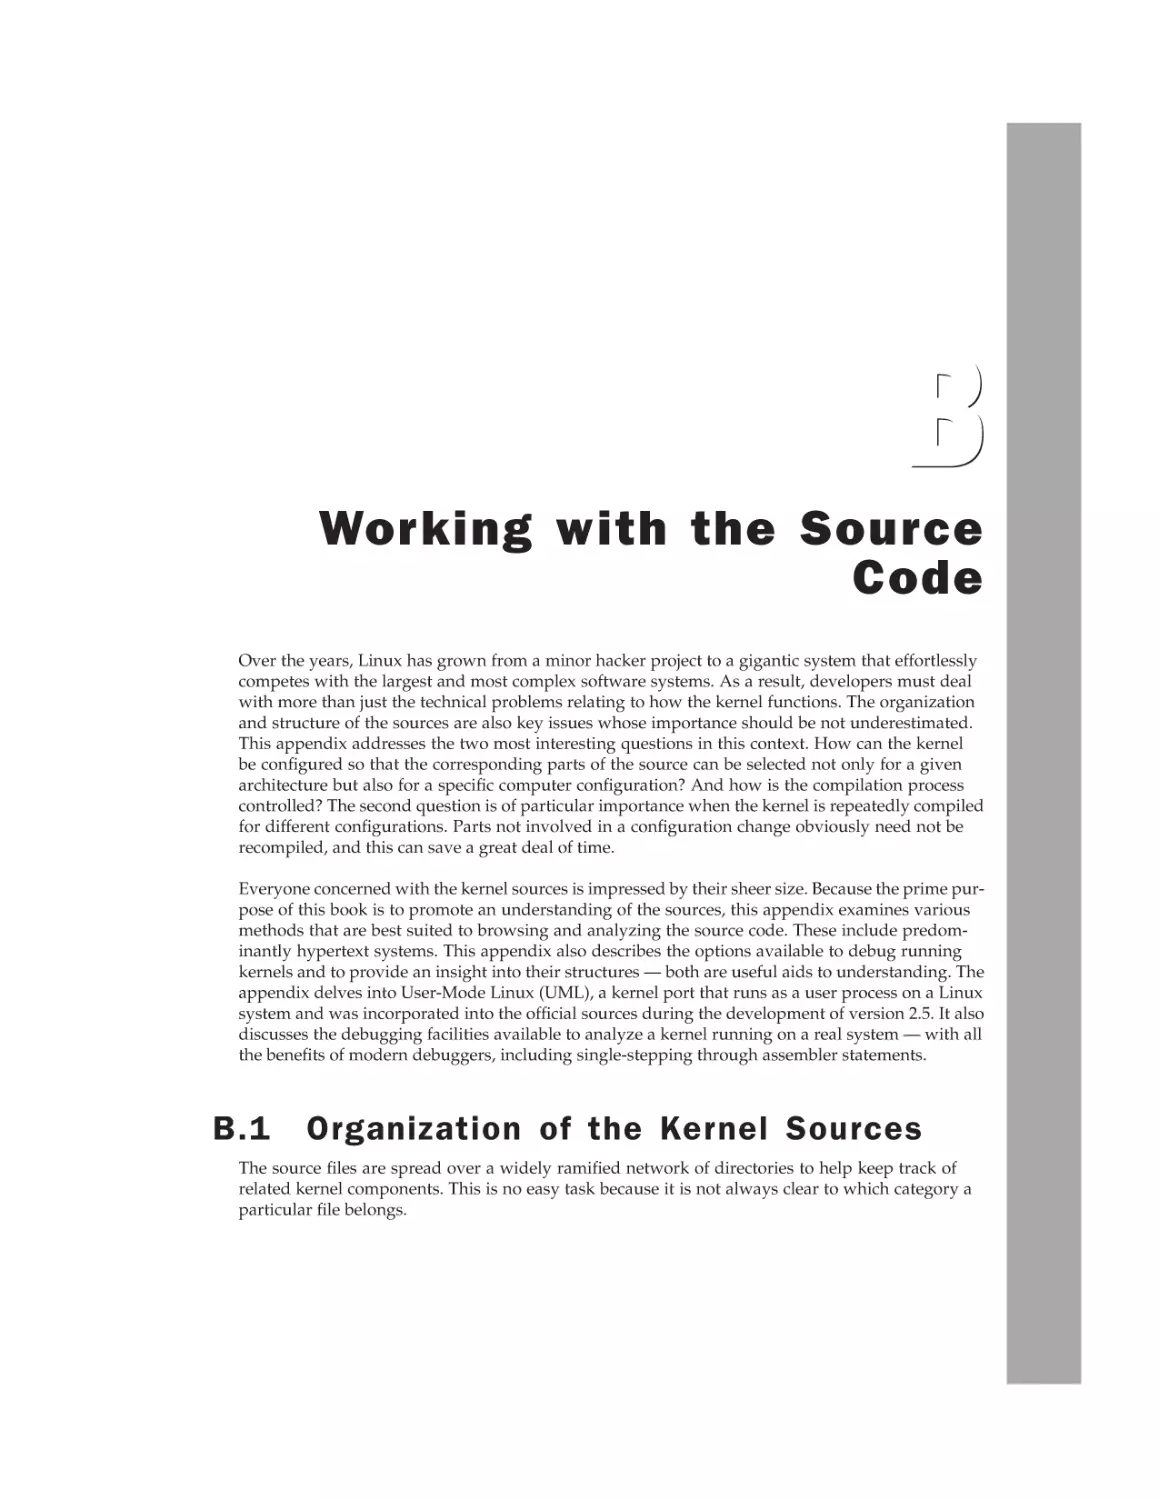 Appendix B
B.1 Organization of the Kernel Sources